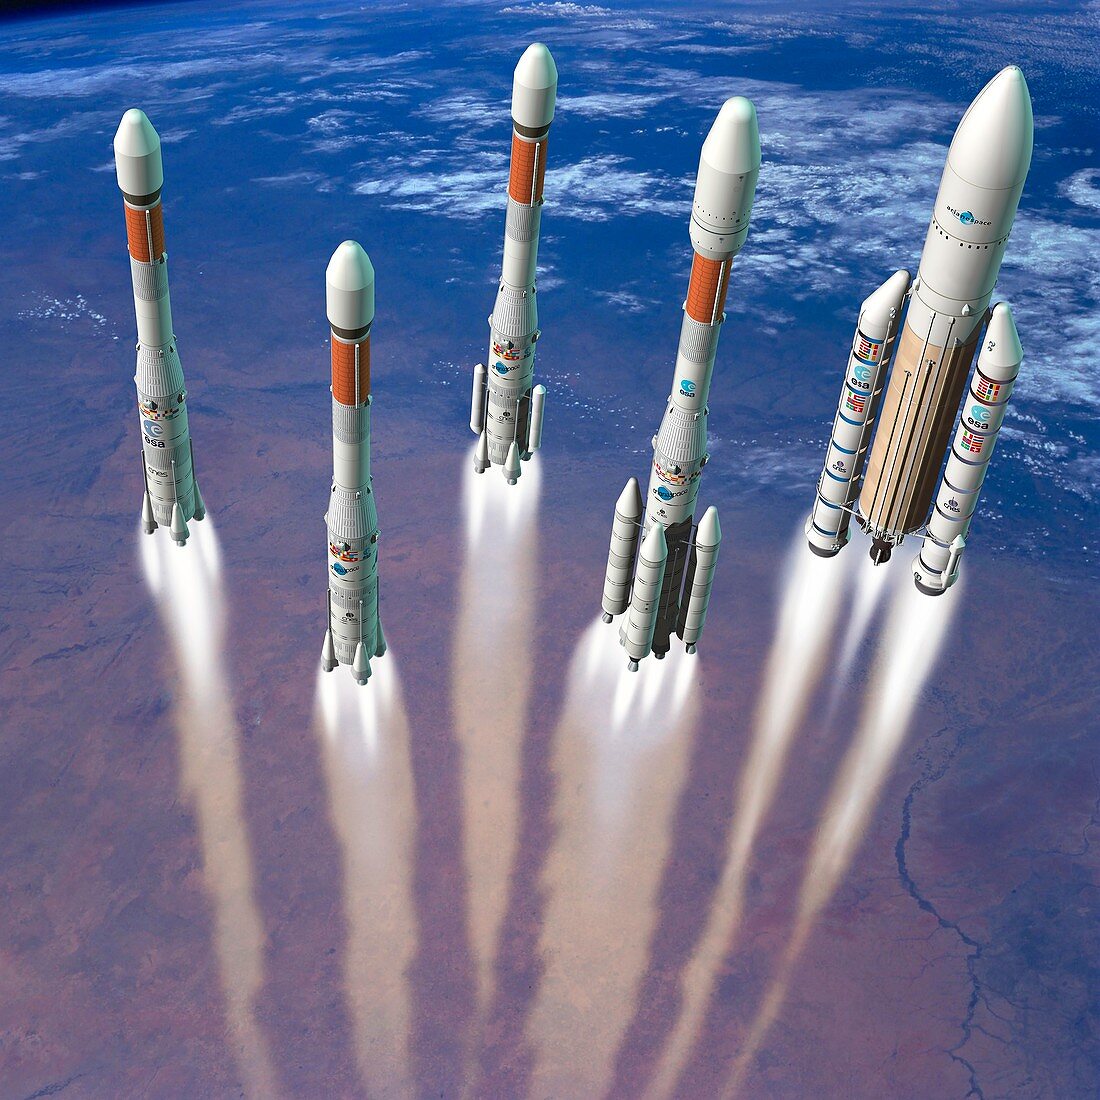 Ariane rockets, illustration